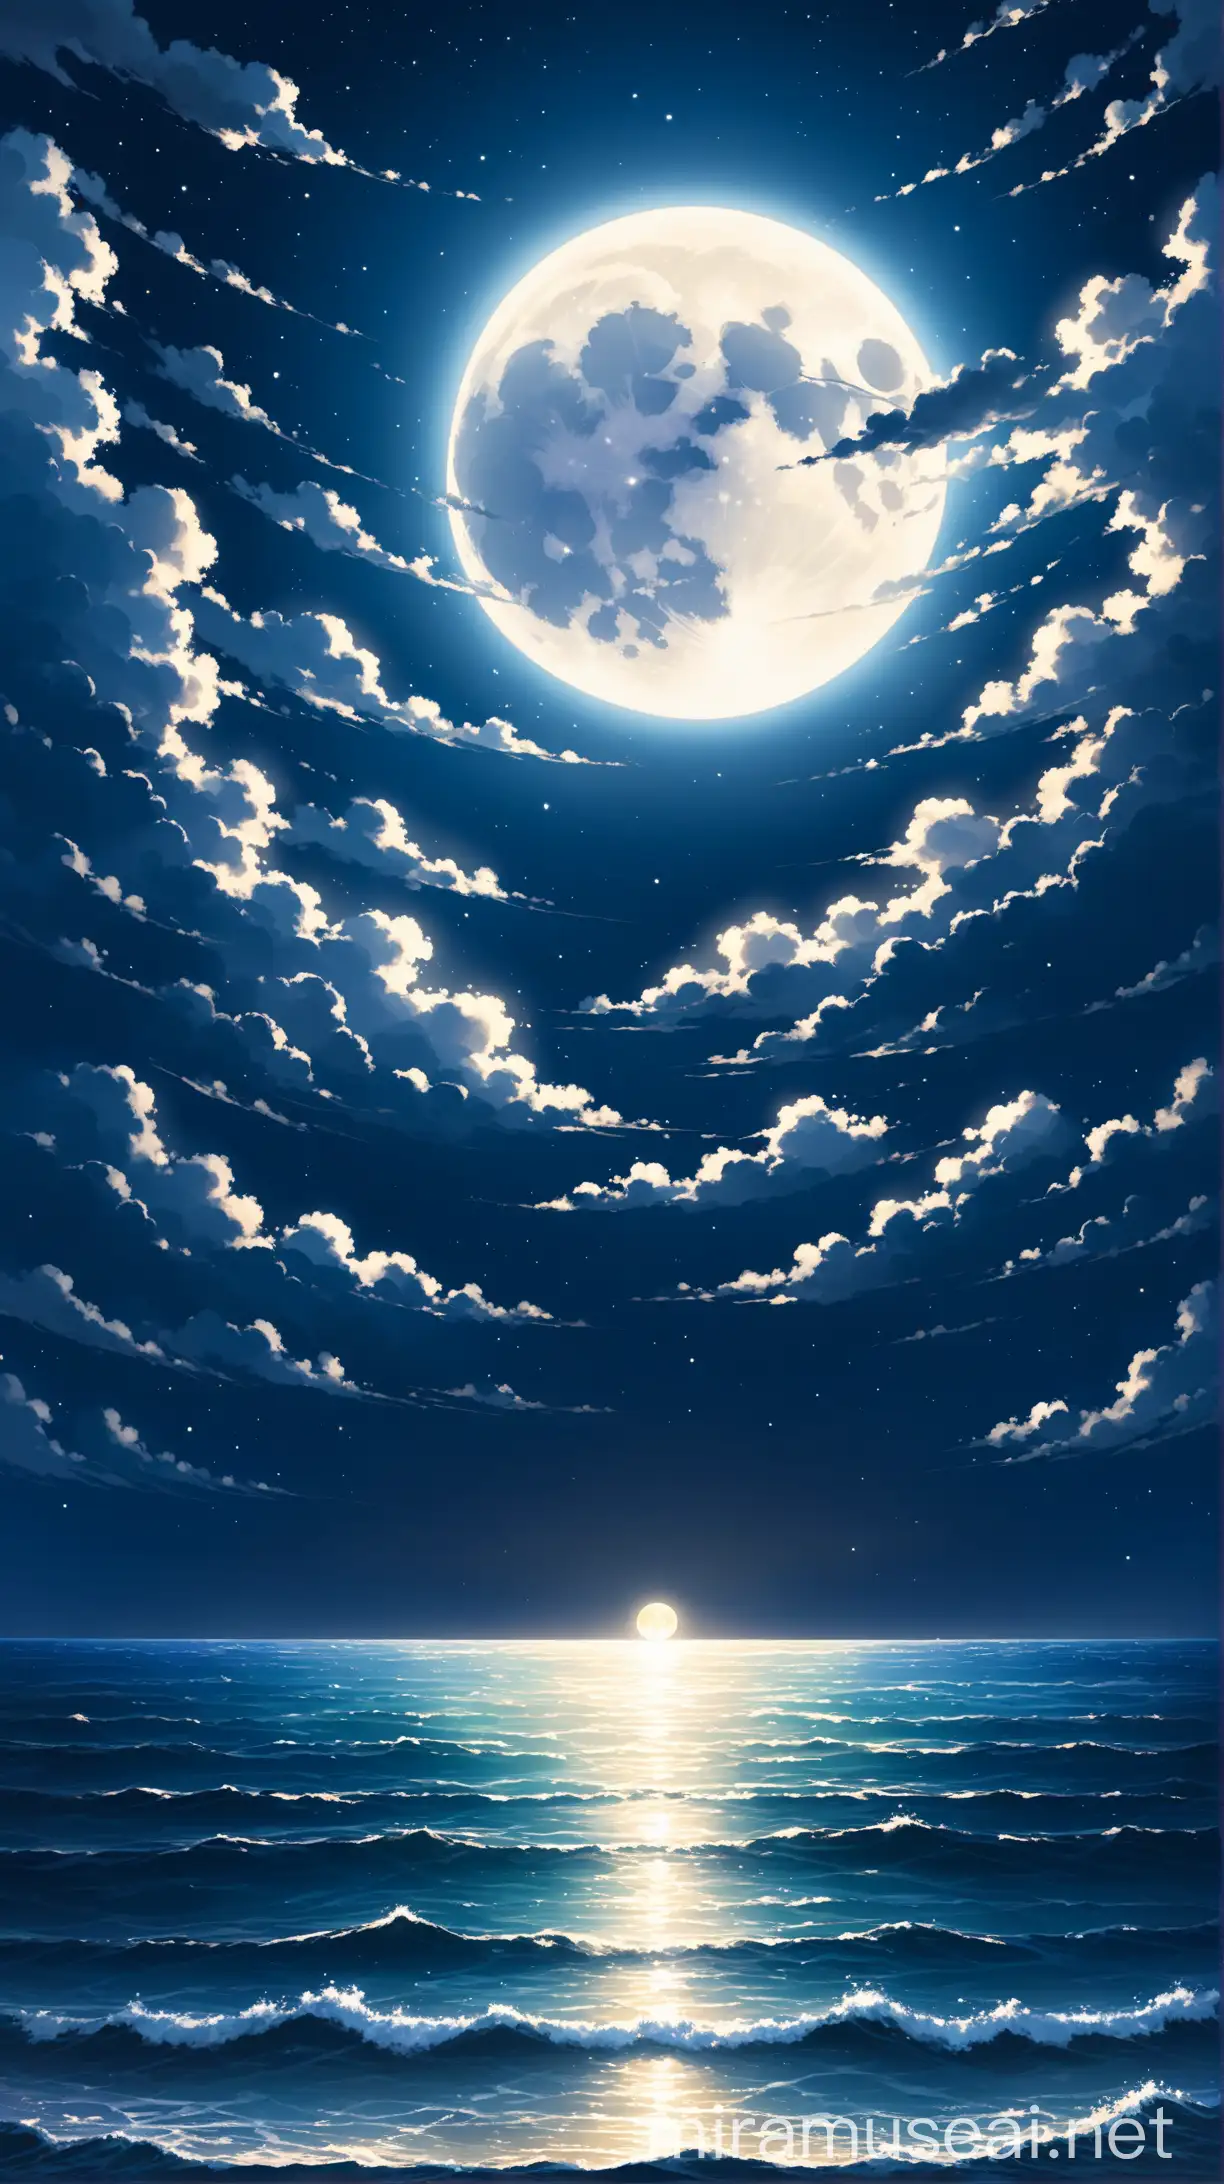 Majestic Full Moon Over Ocean Night Sky